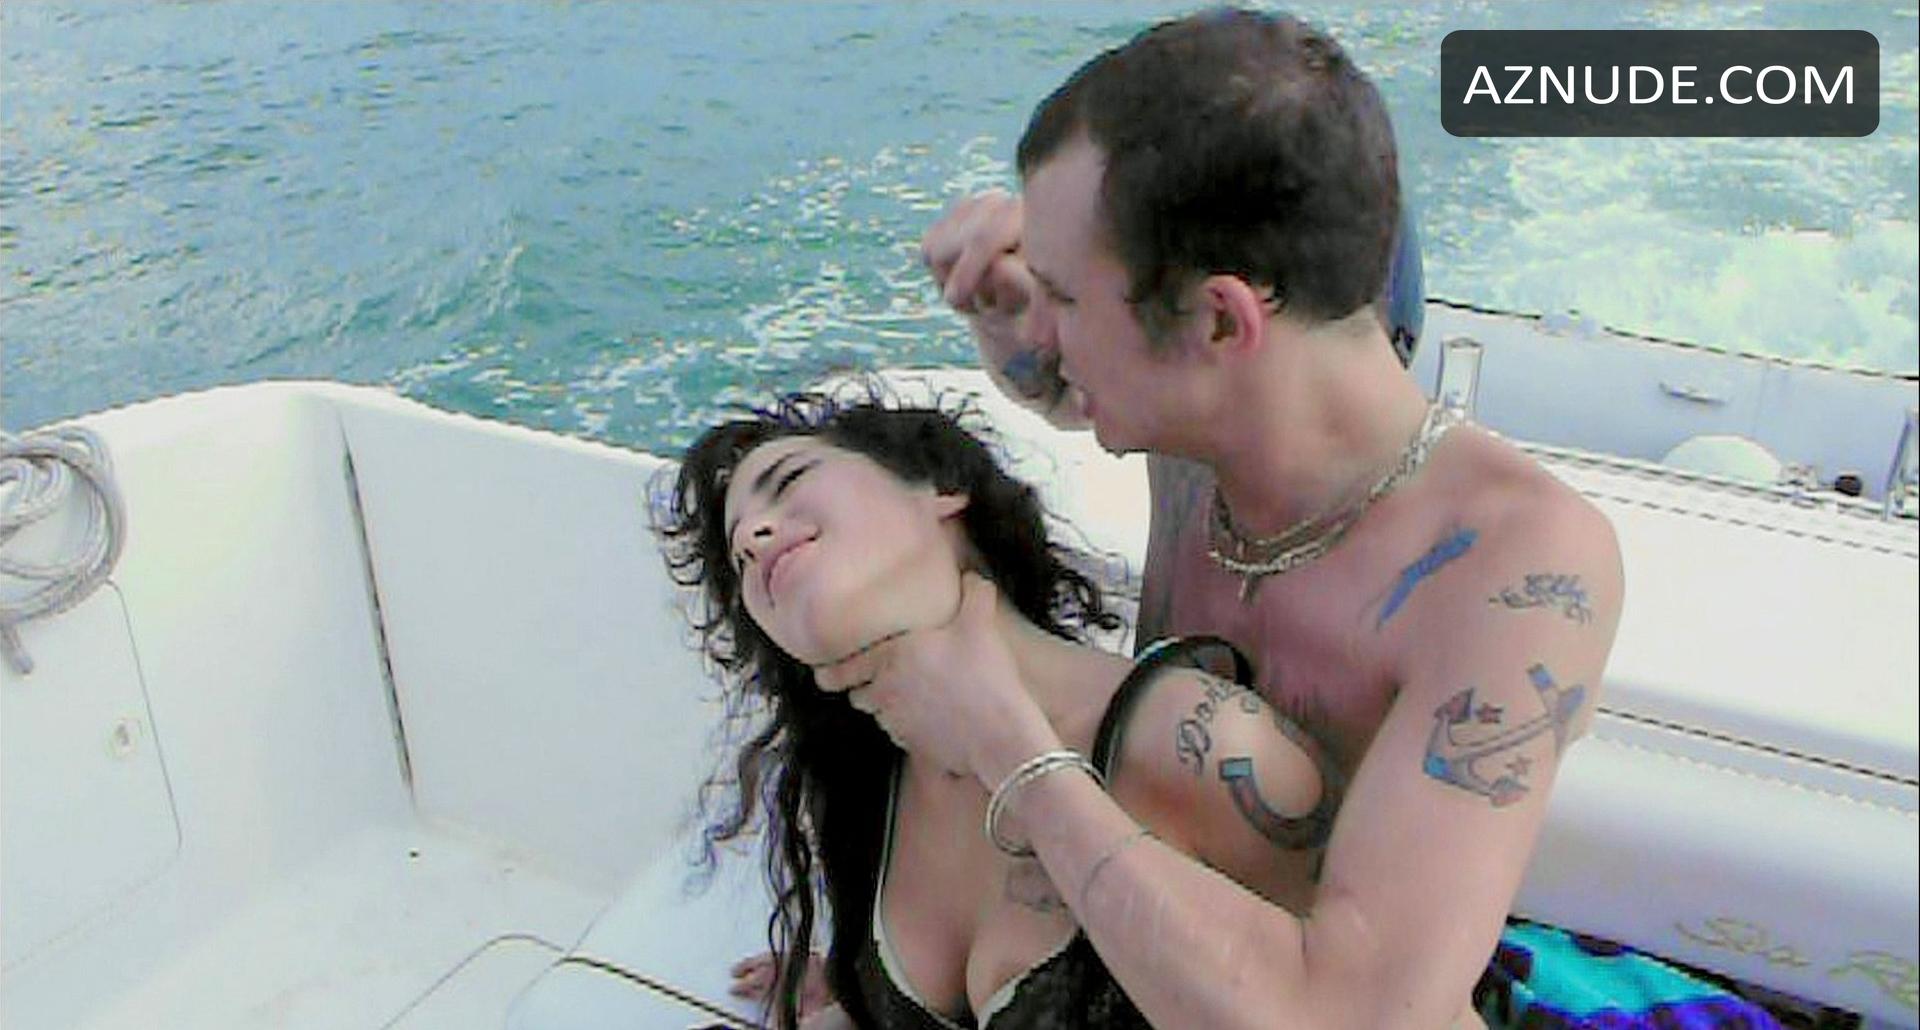 Amy Winehouse Nude Aznude